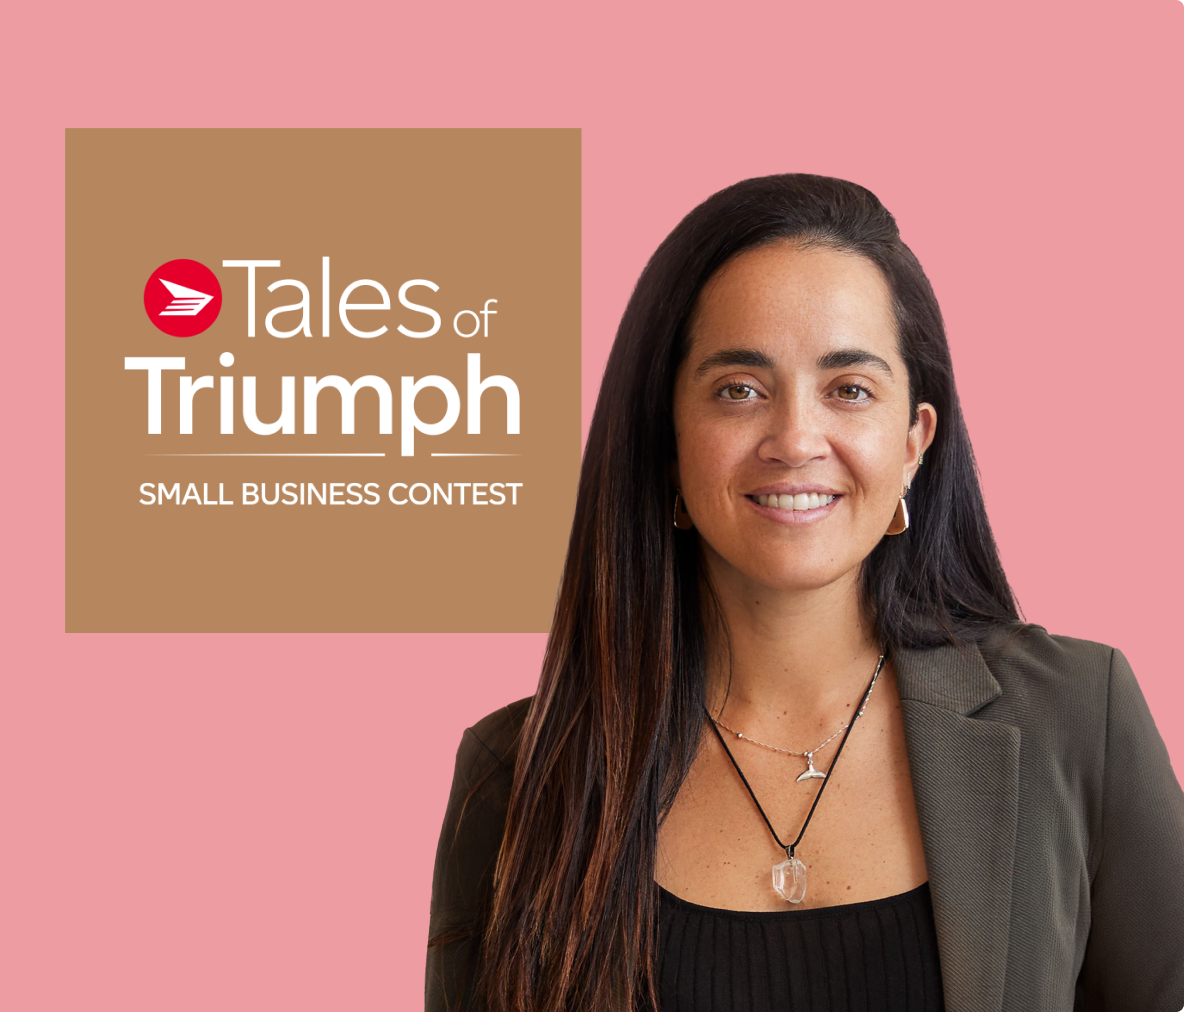 “Tales of triumph small business contest”: Constanza Safatle, CEO and Founder of Newbornlander.